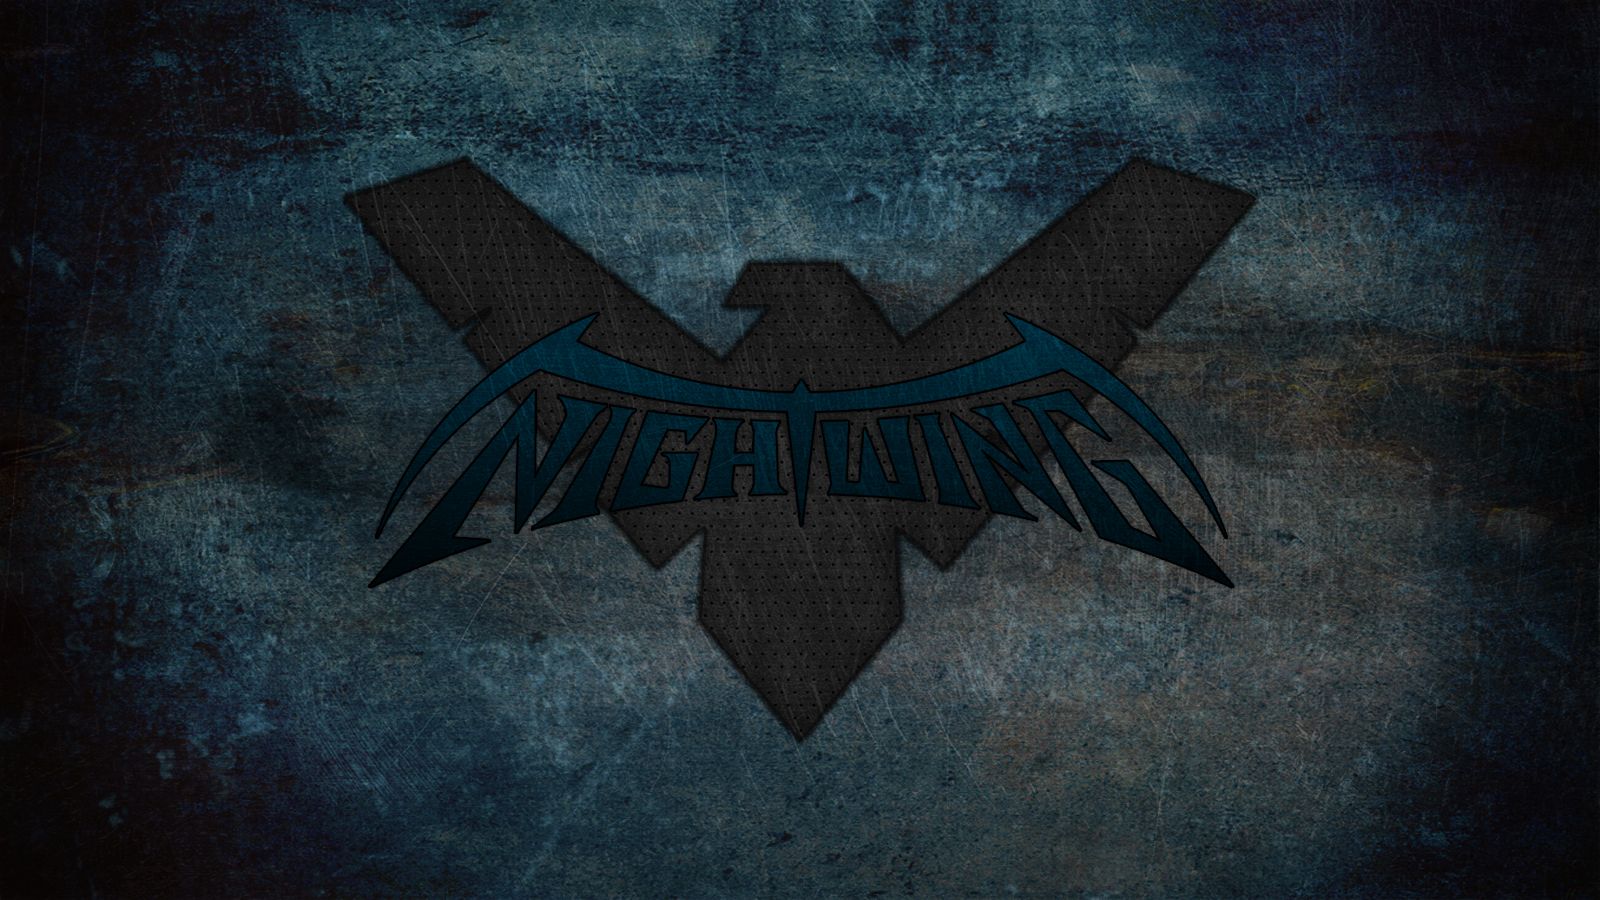 Nightwing | Wallpaper by Squiddytron on DeviantArt